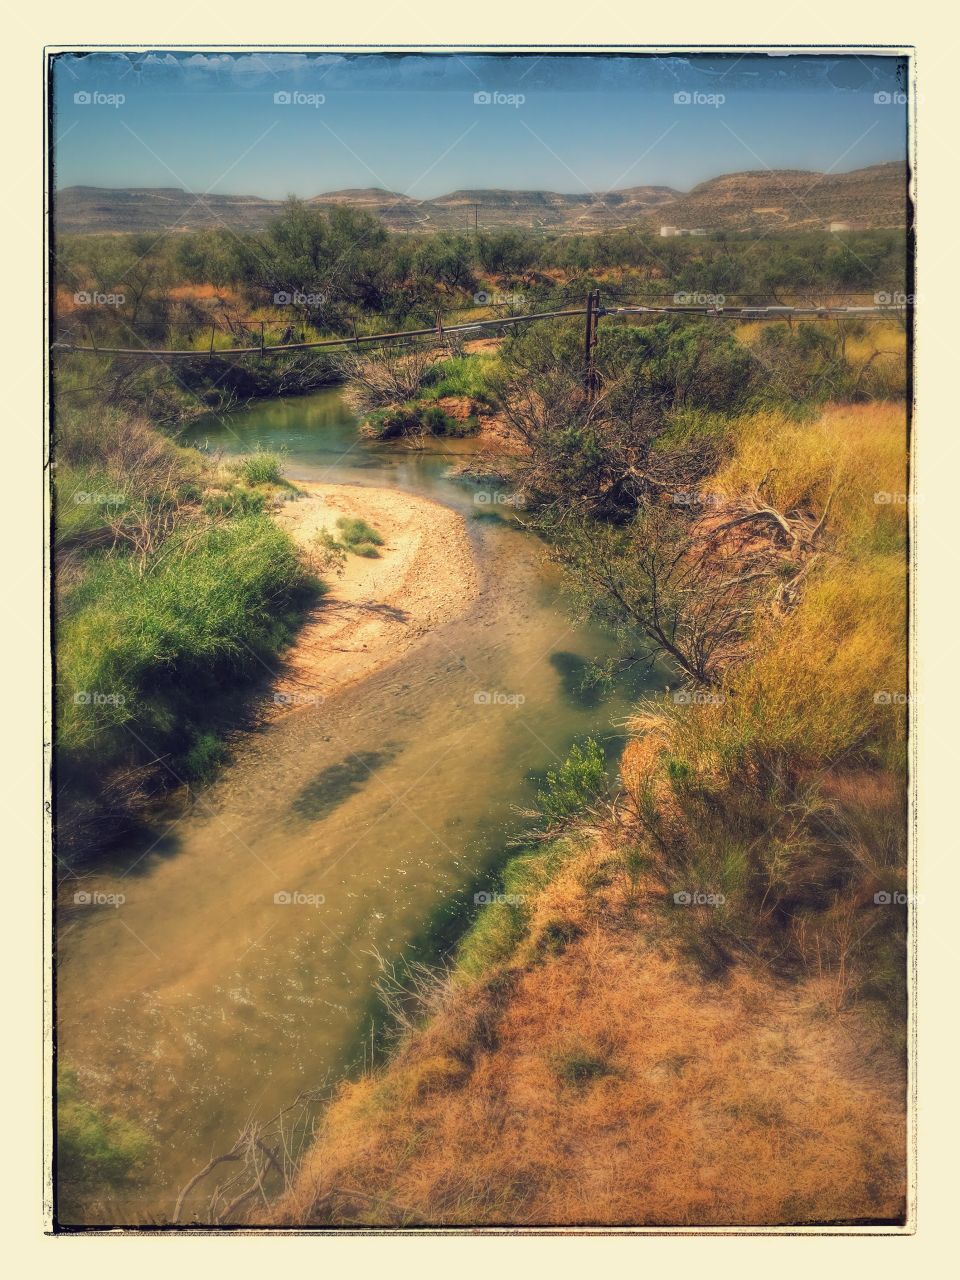 The Pecos River 